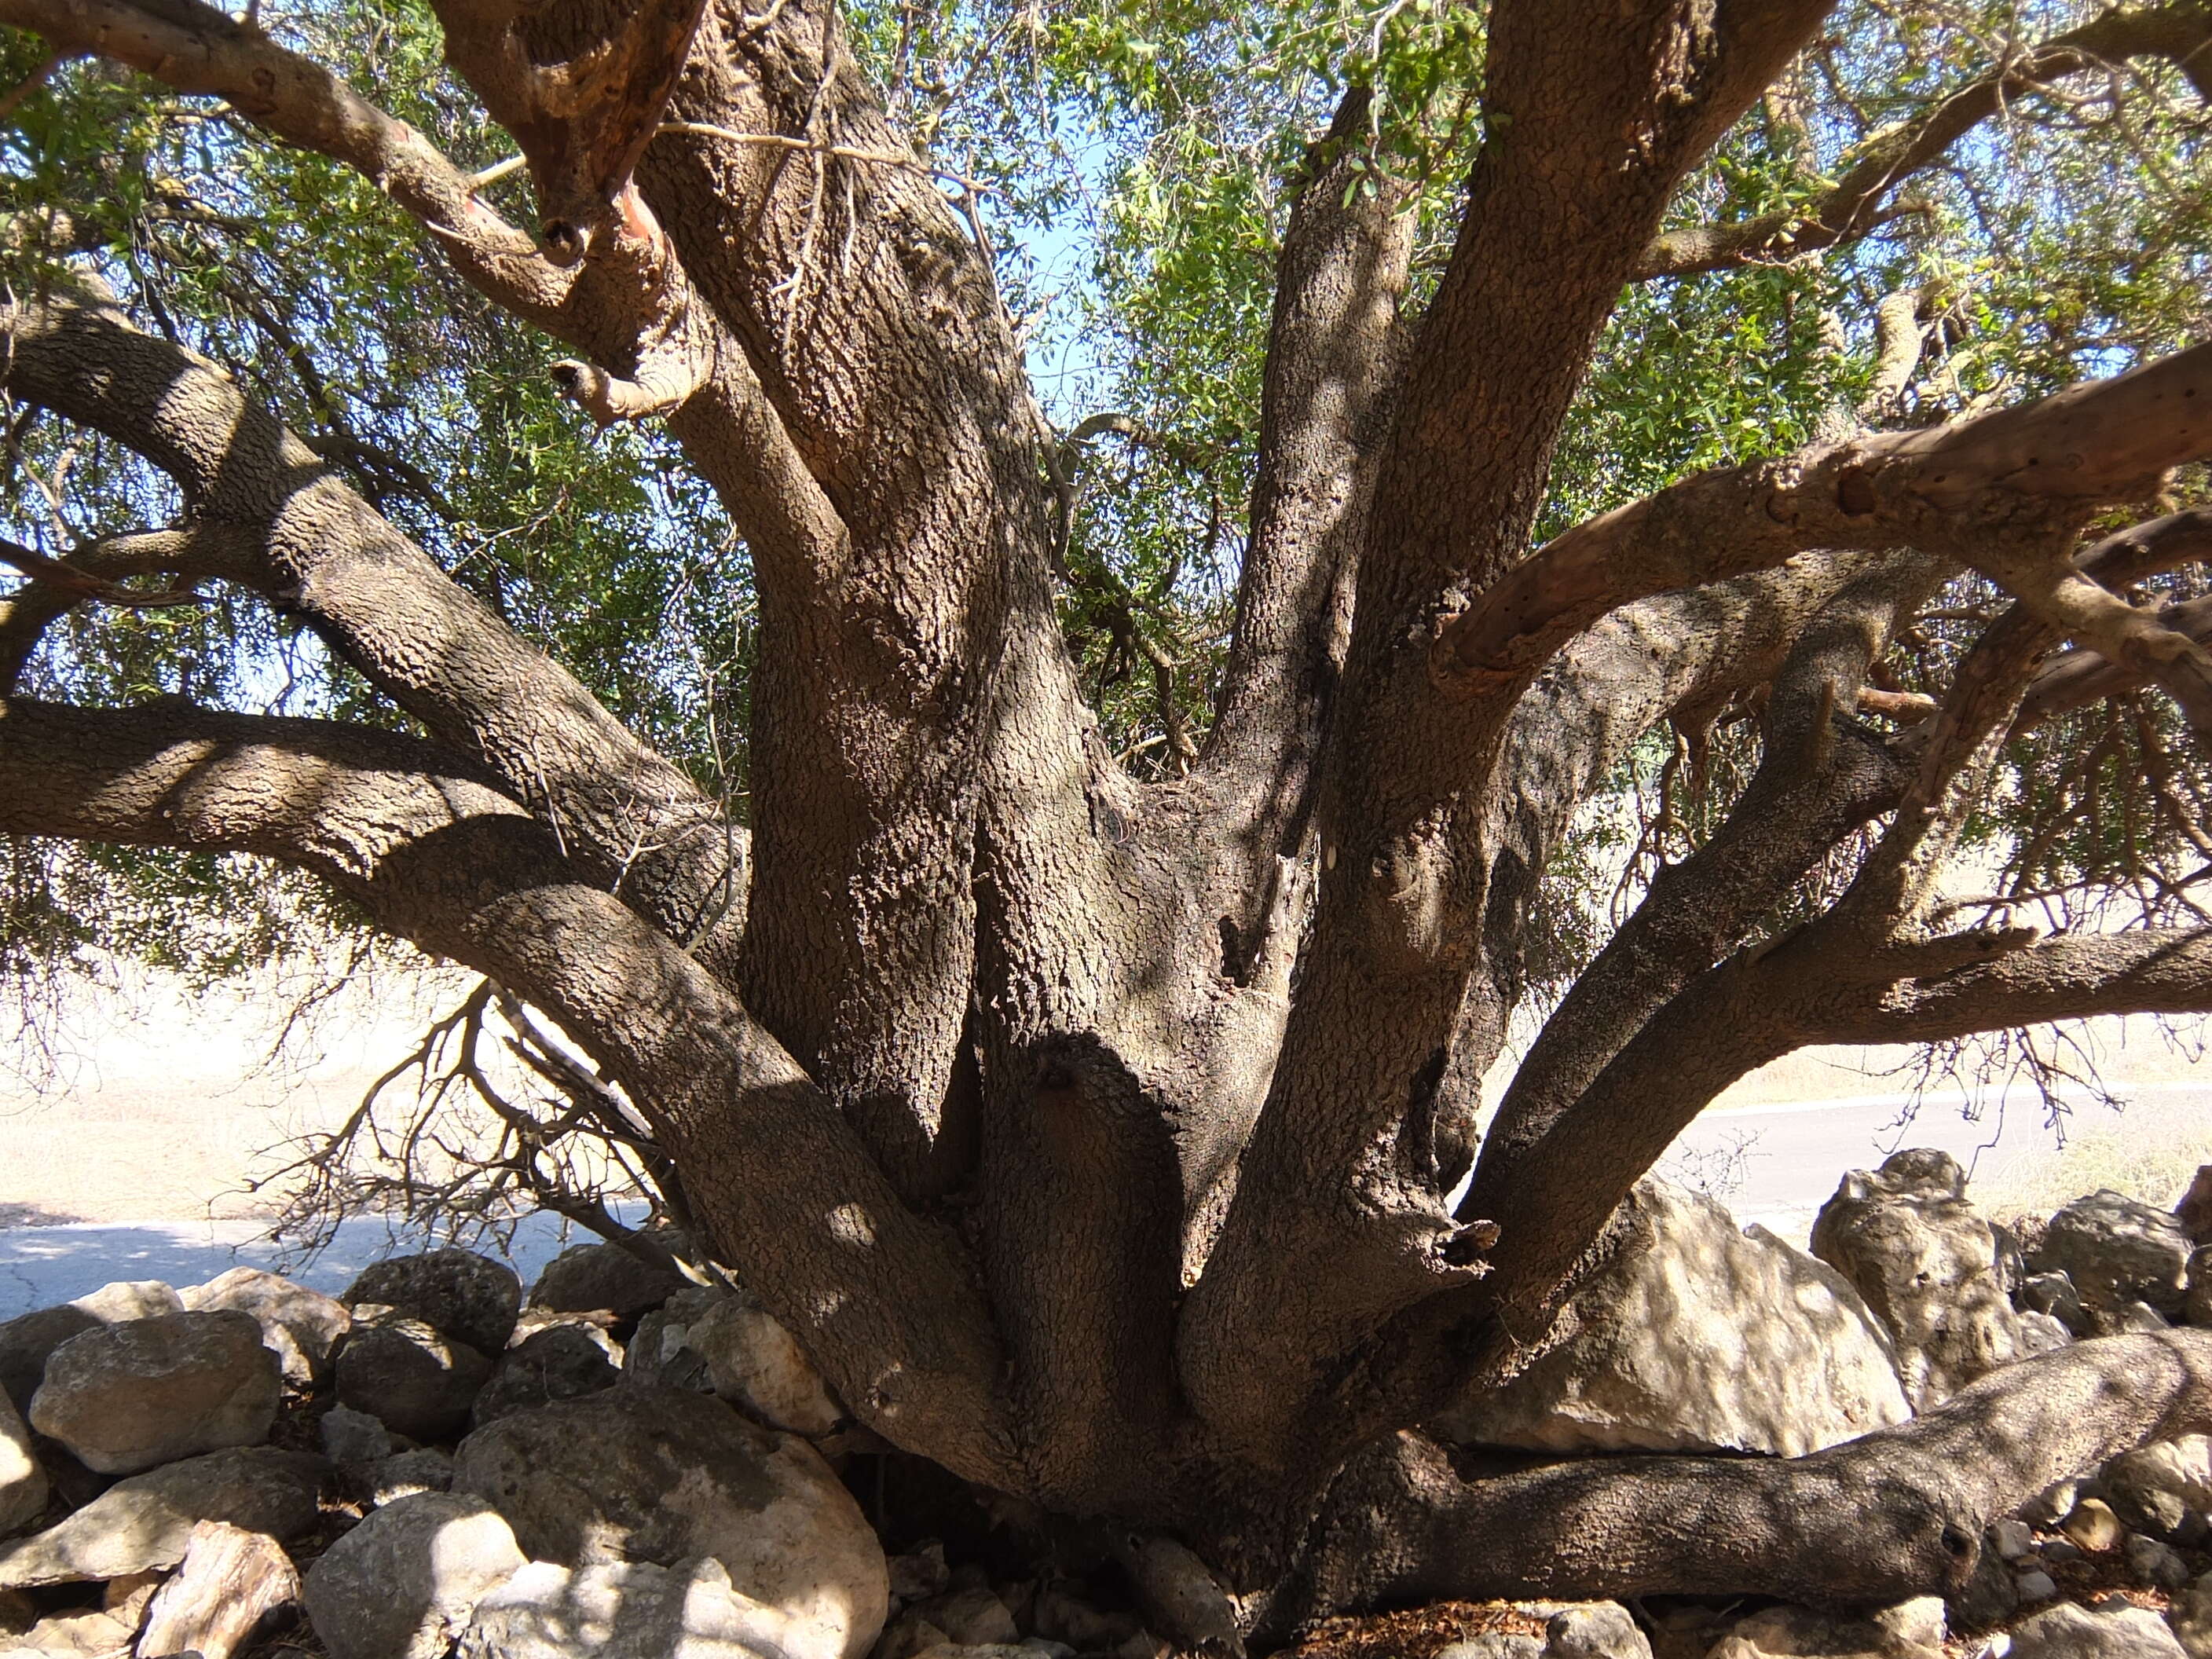 Image of Mt. Atlas mastic tree